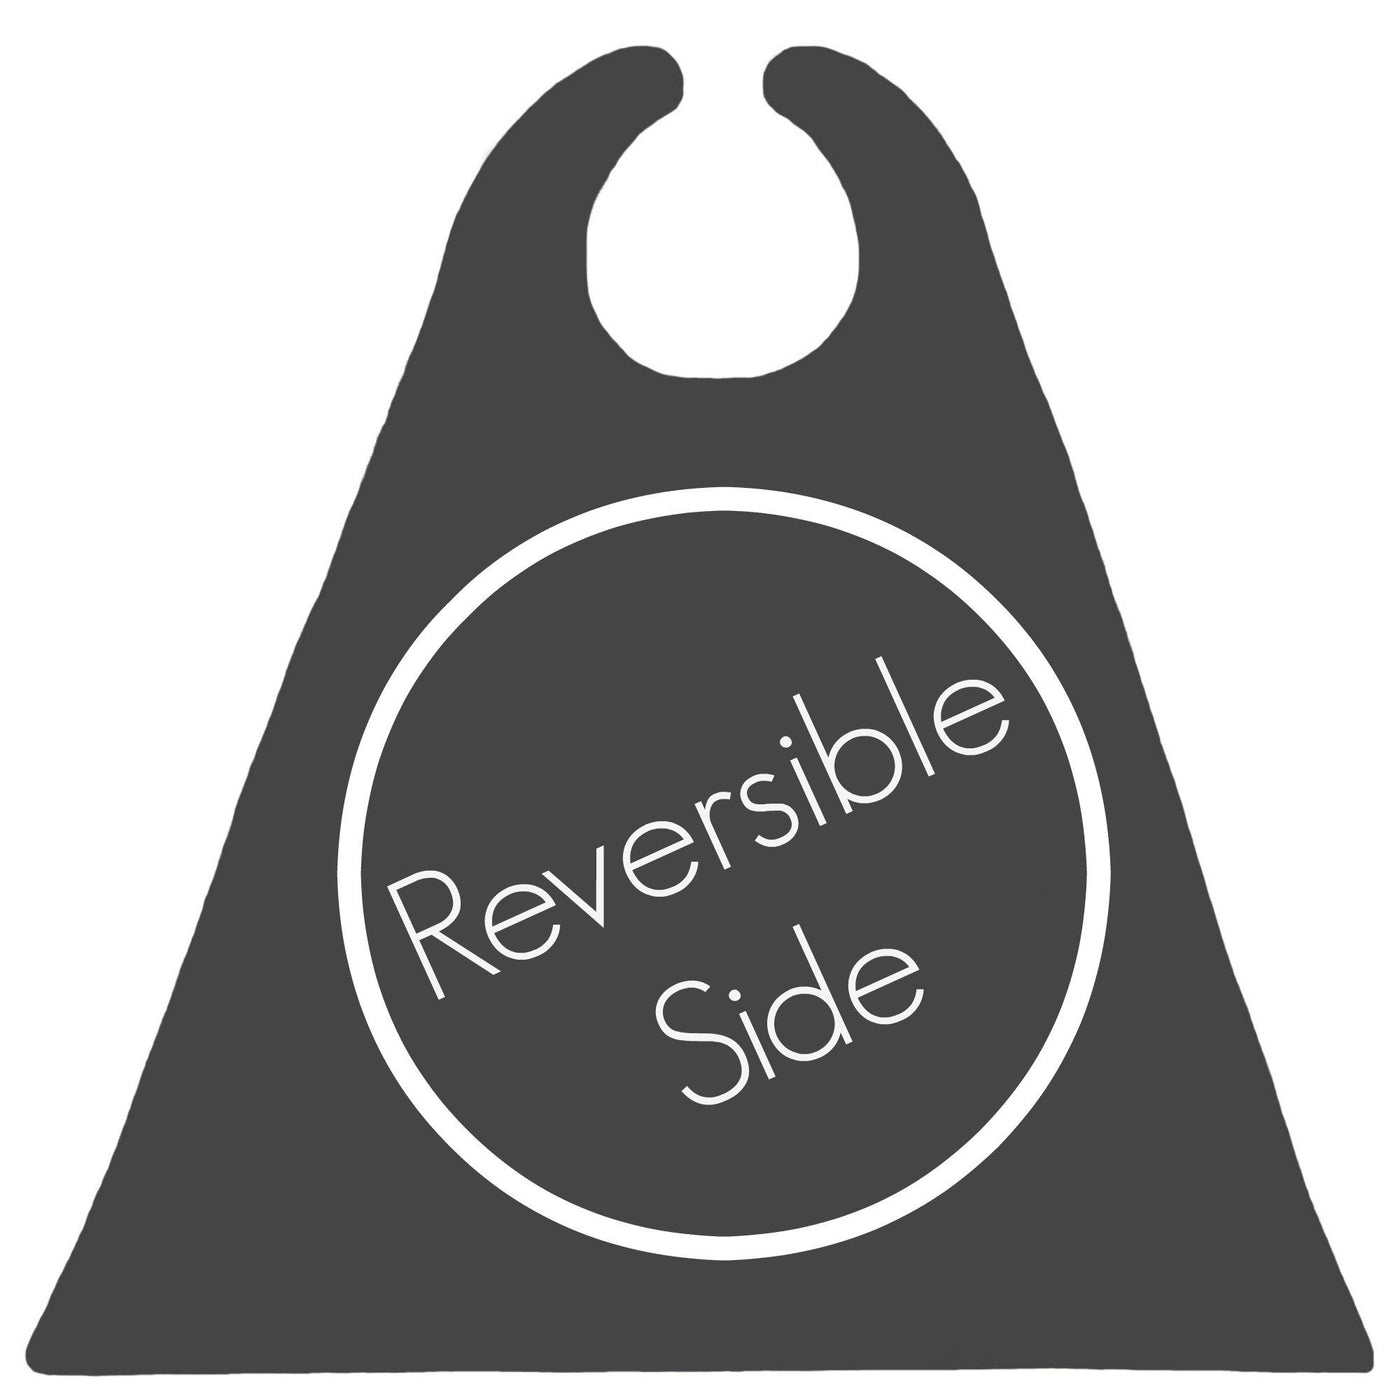 Reversible Side